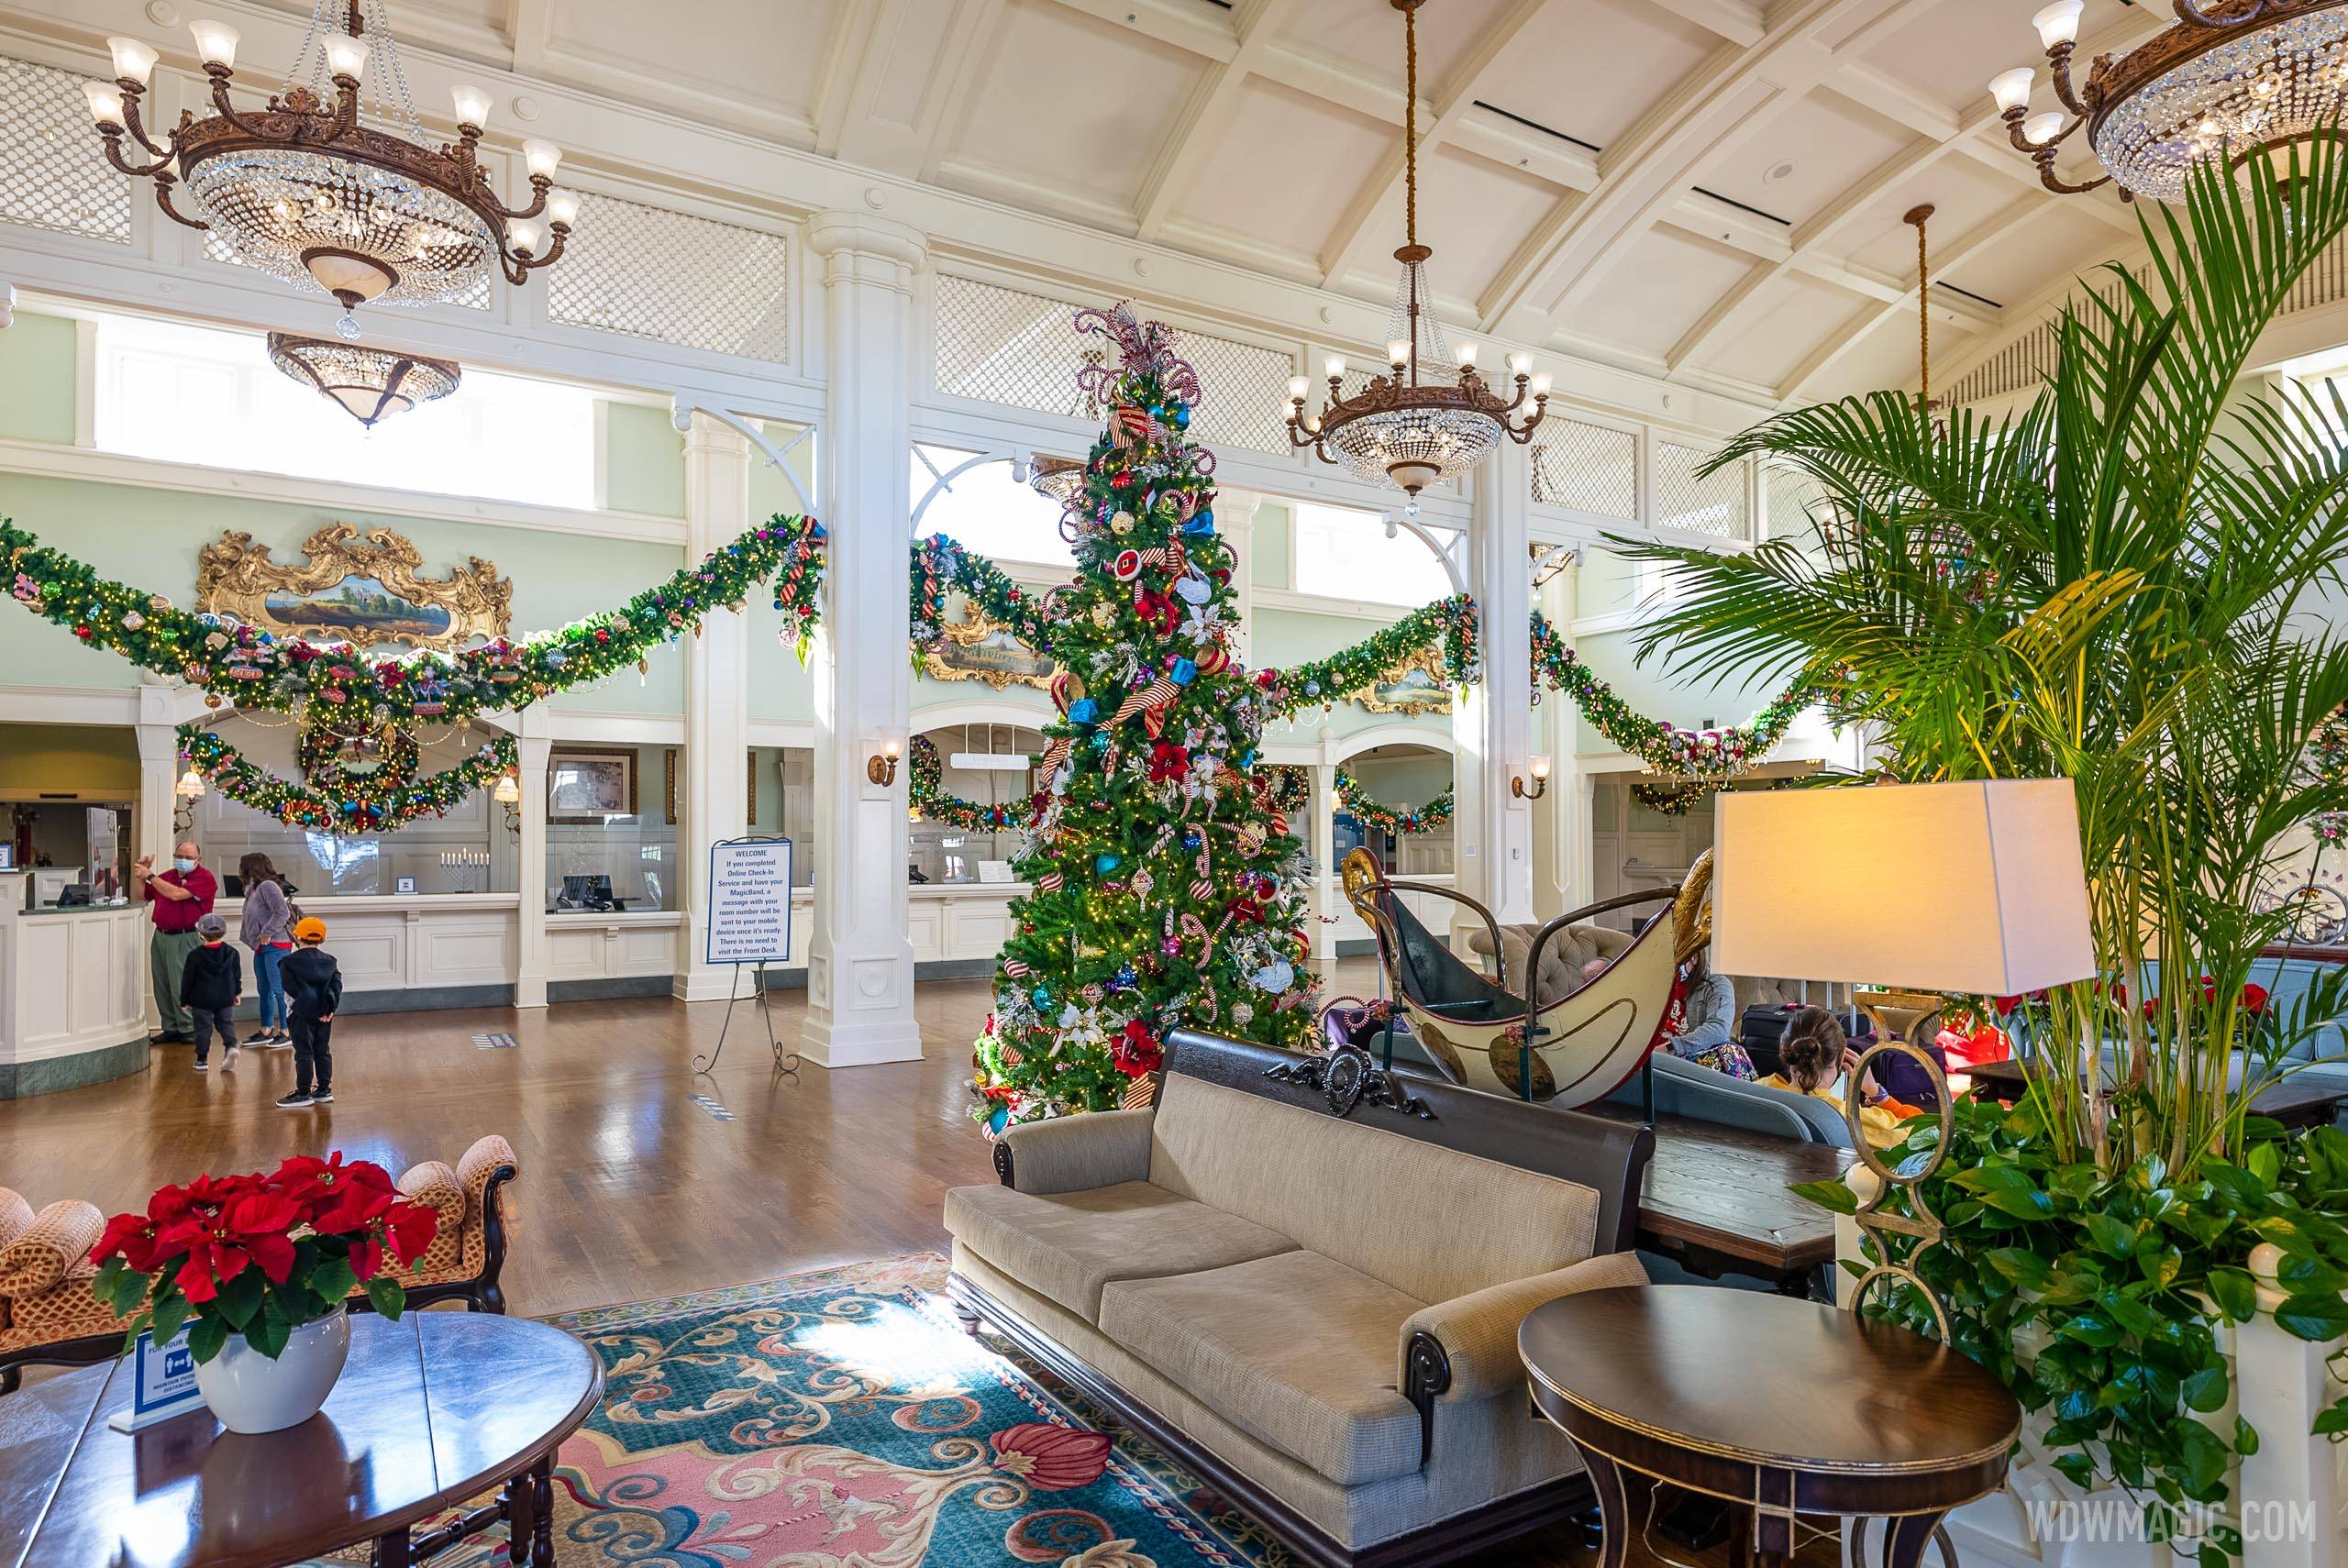 Disney's BoardWalk Inn holiday decorations 2020